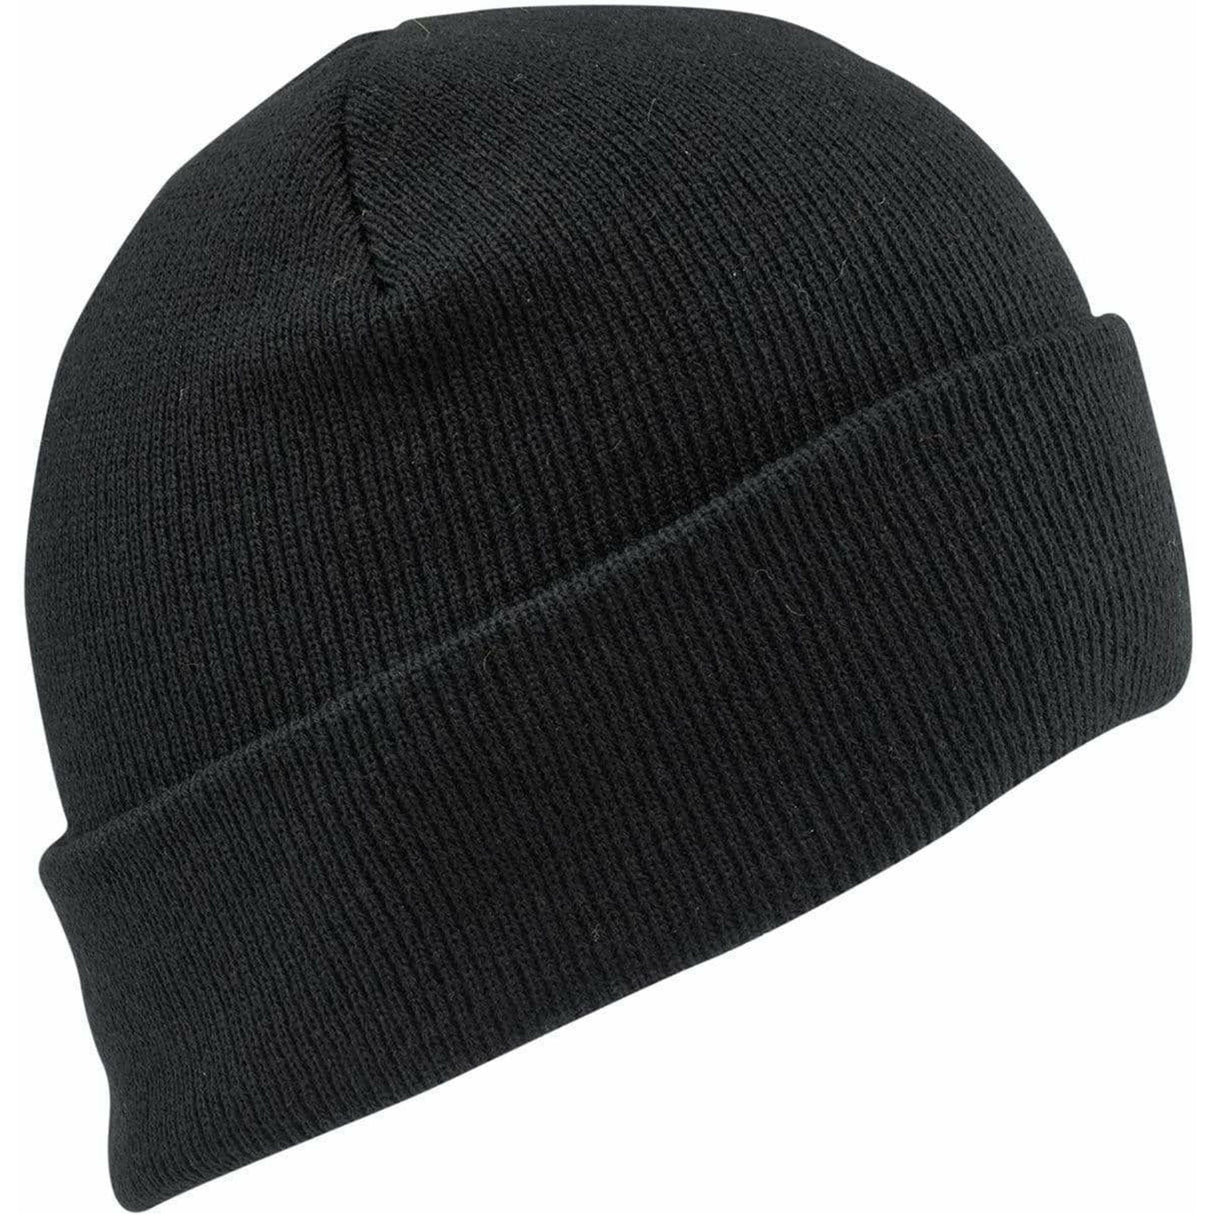 Wigwam Unisex 1017 Hat  -  One Size Fits Most / Black